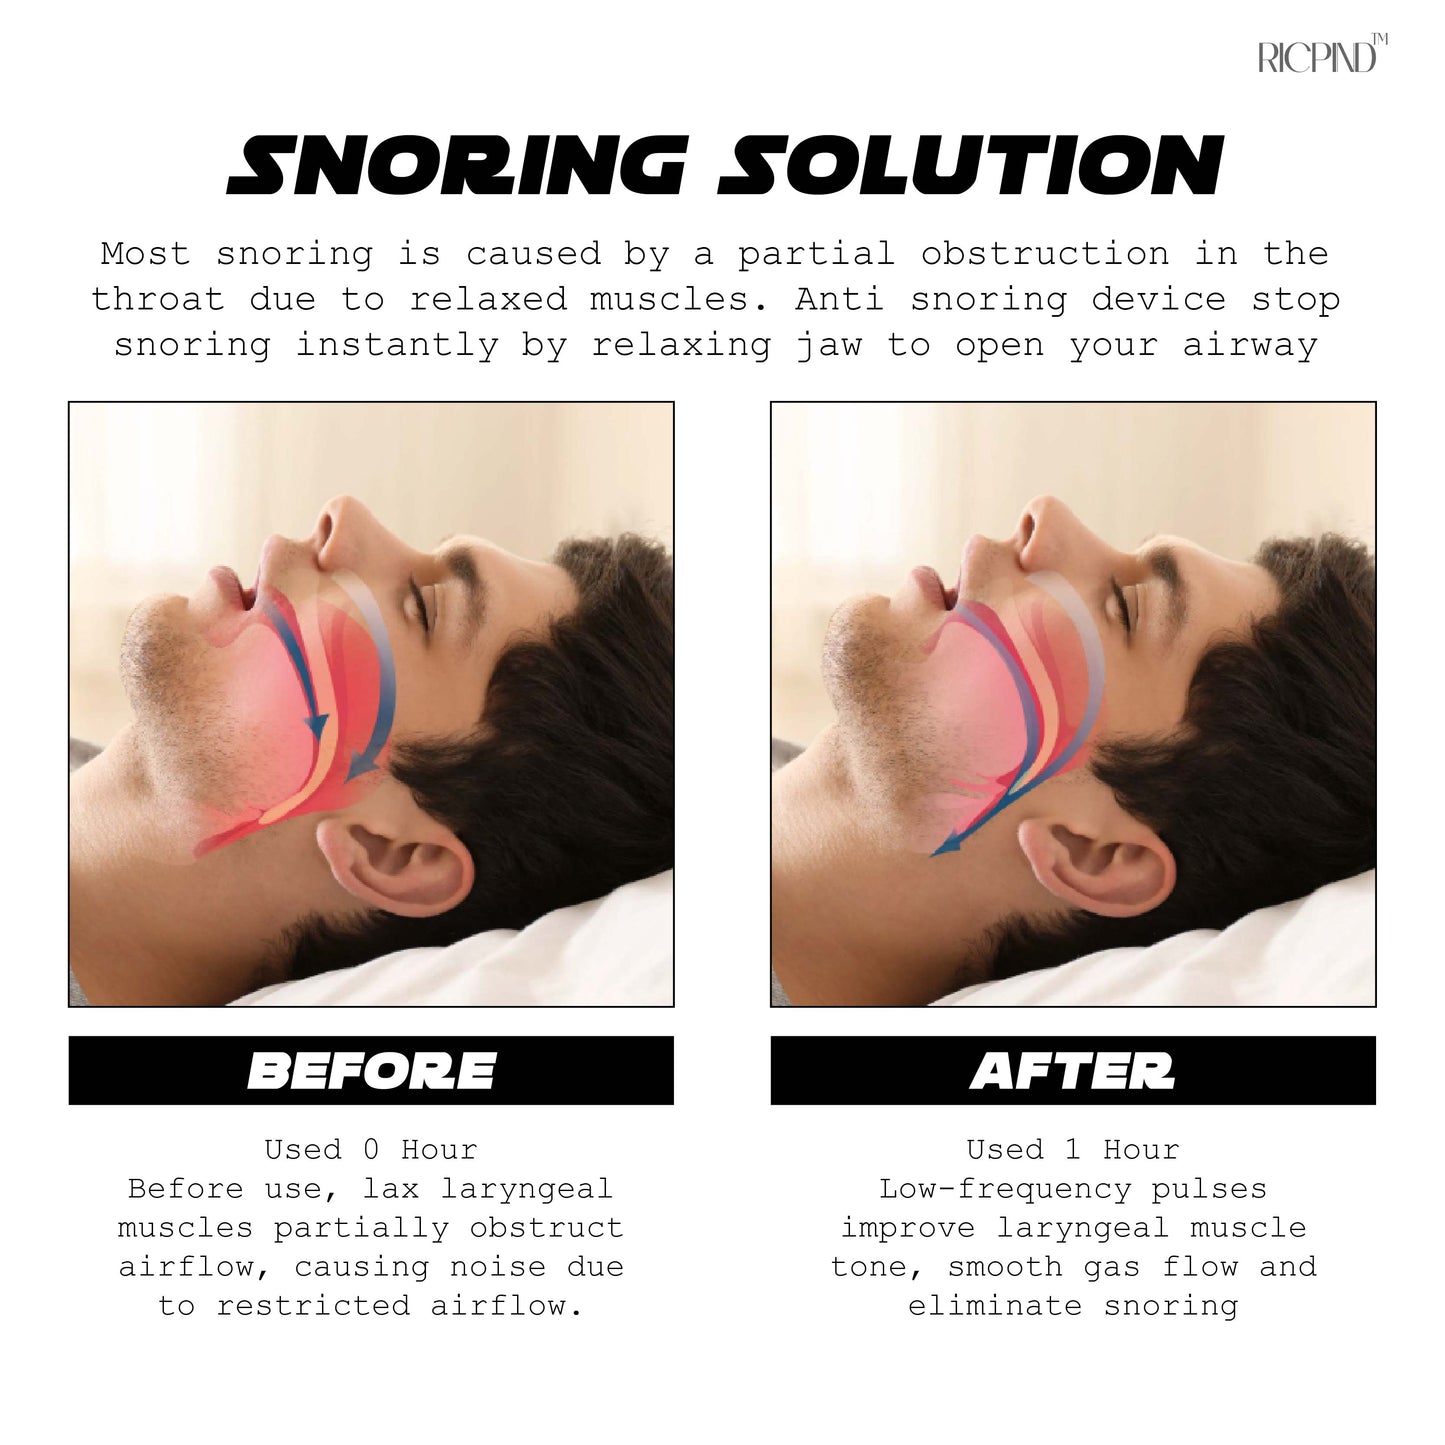 Ricpind AI Instant SnoringReduction Vibrating Stopper